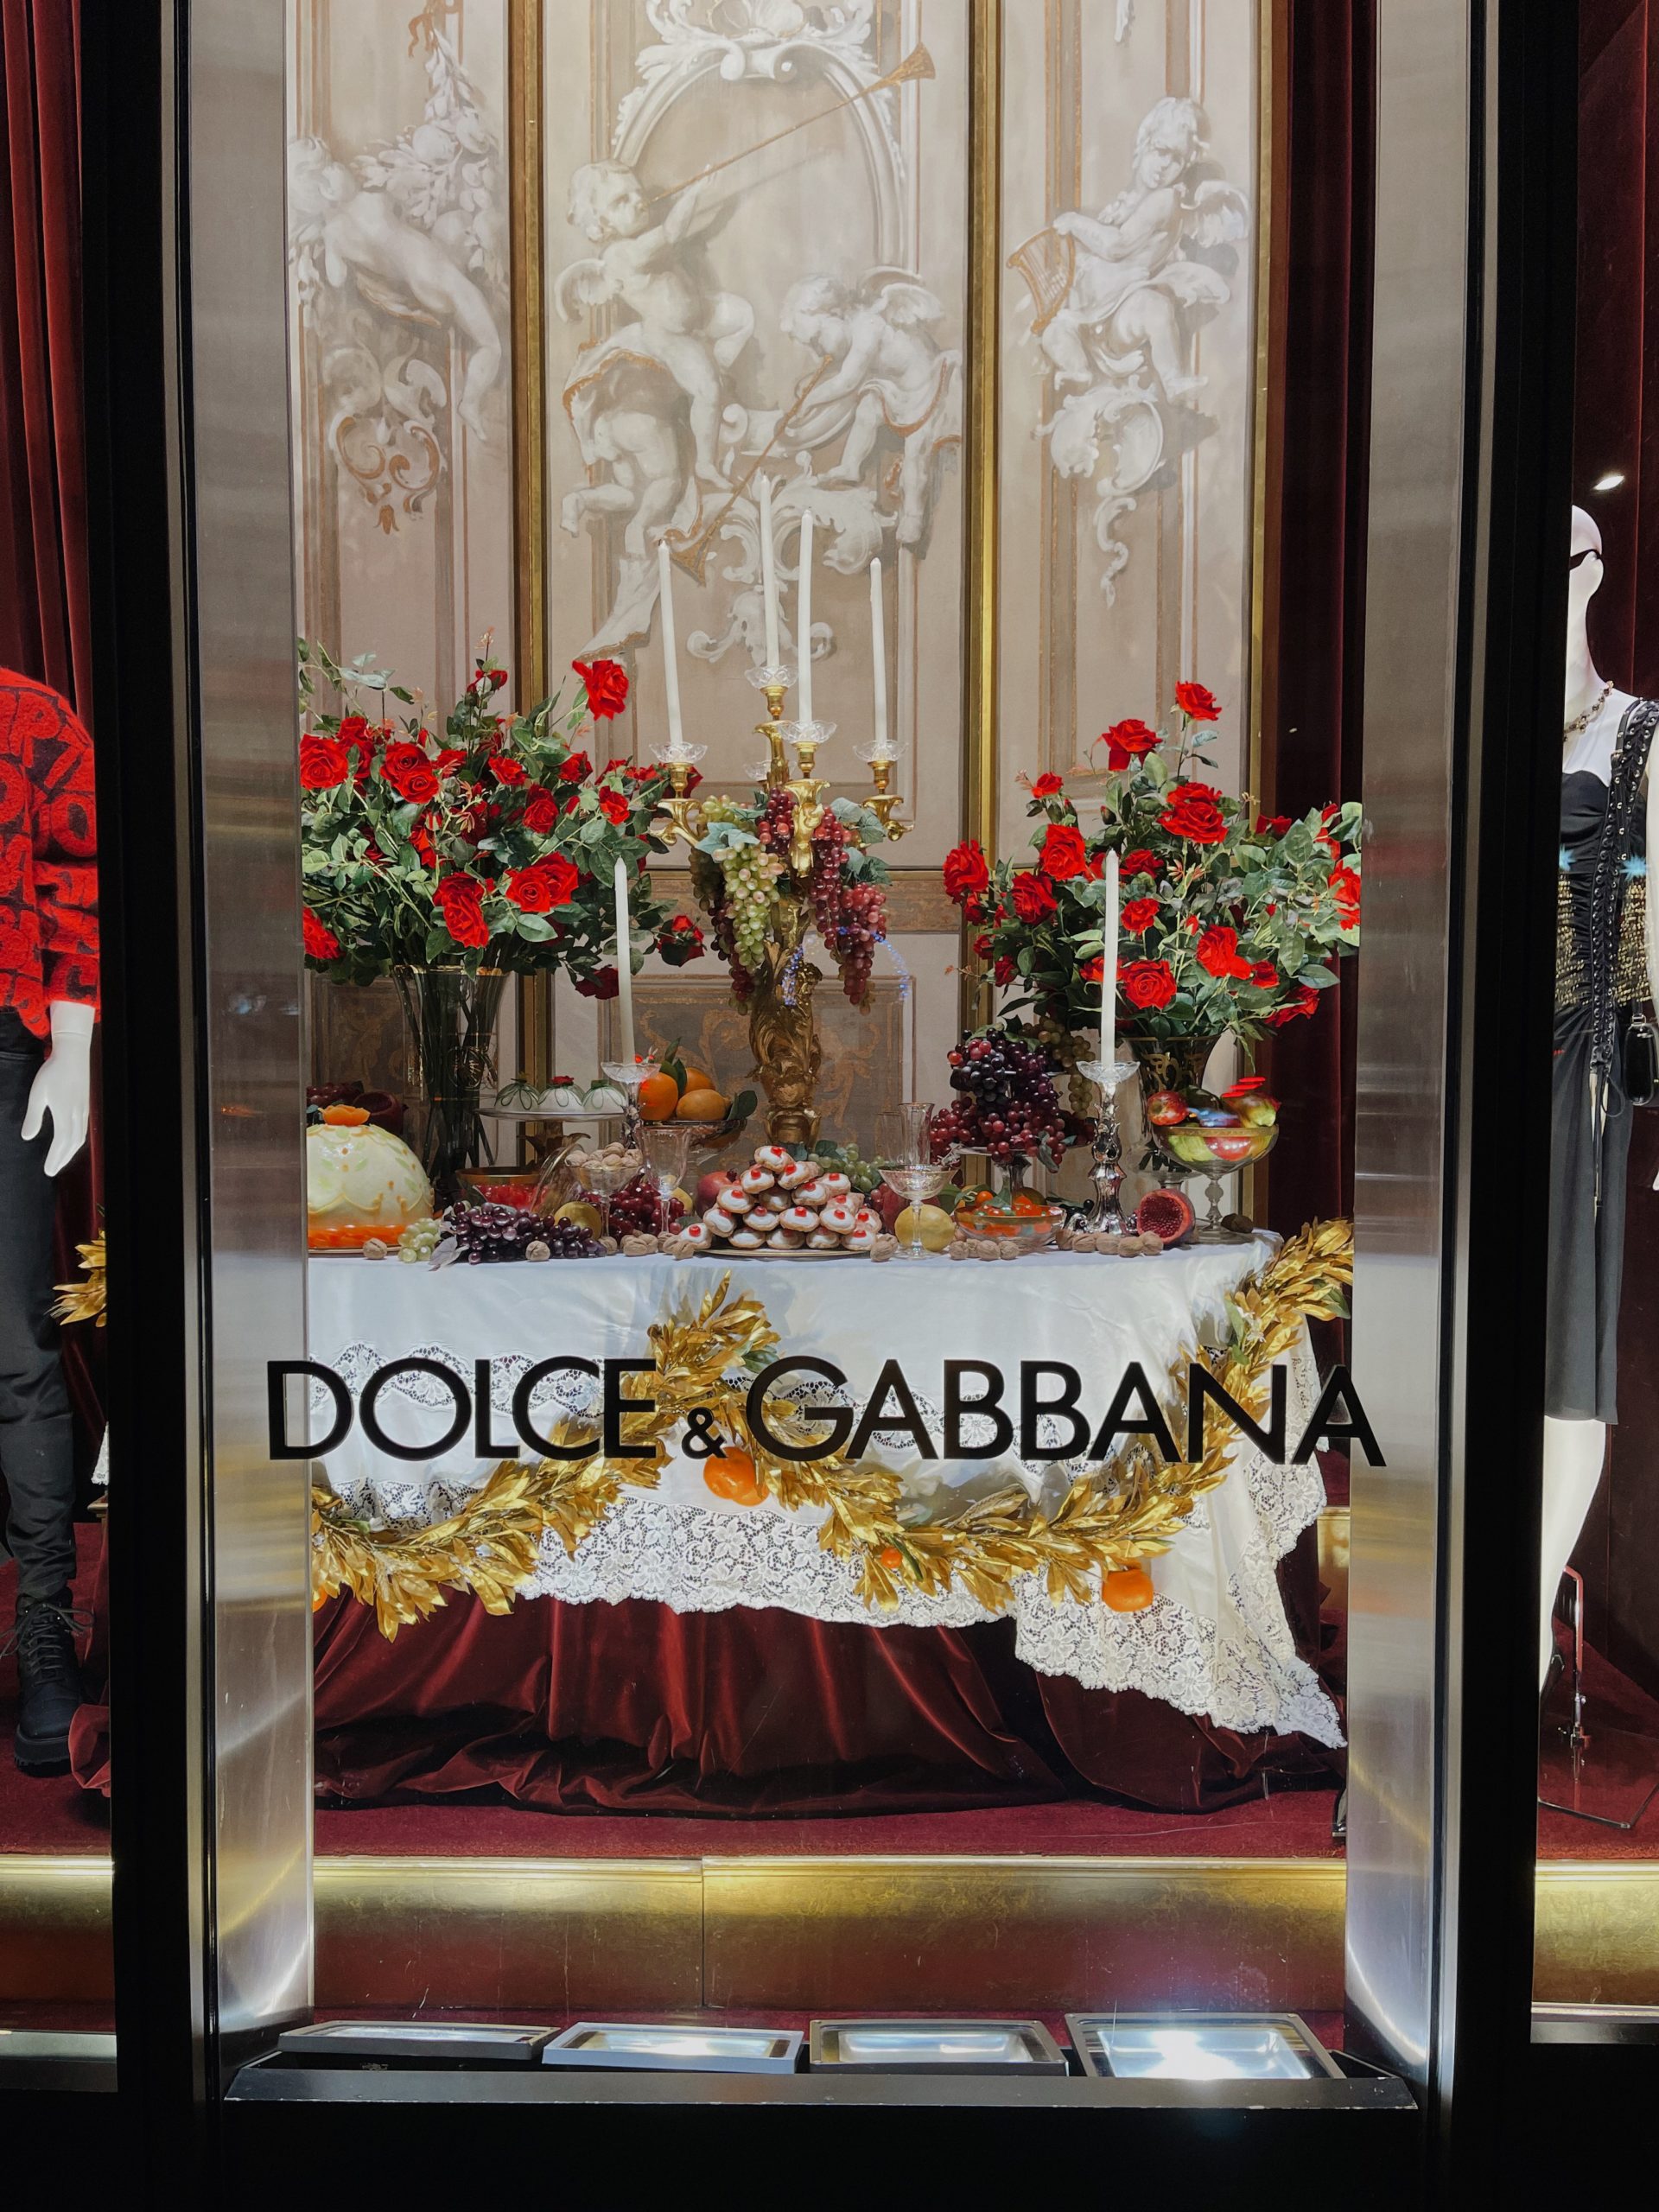 Dolce and Gabbana window display 5th Avenue